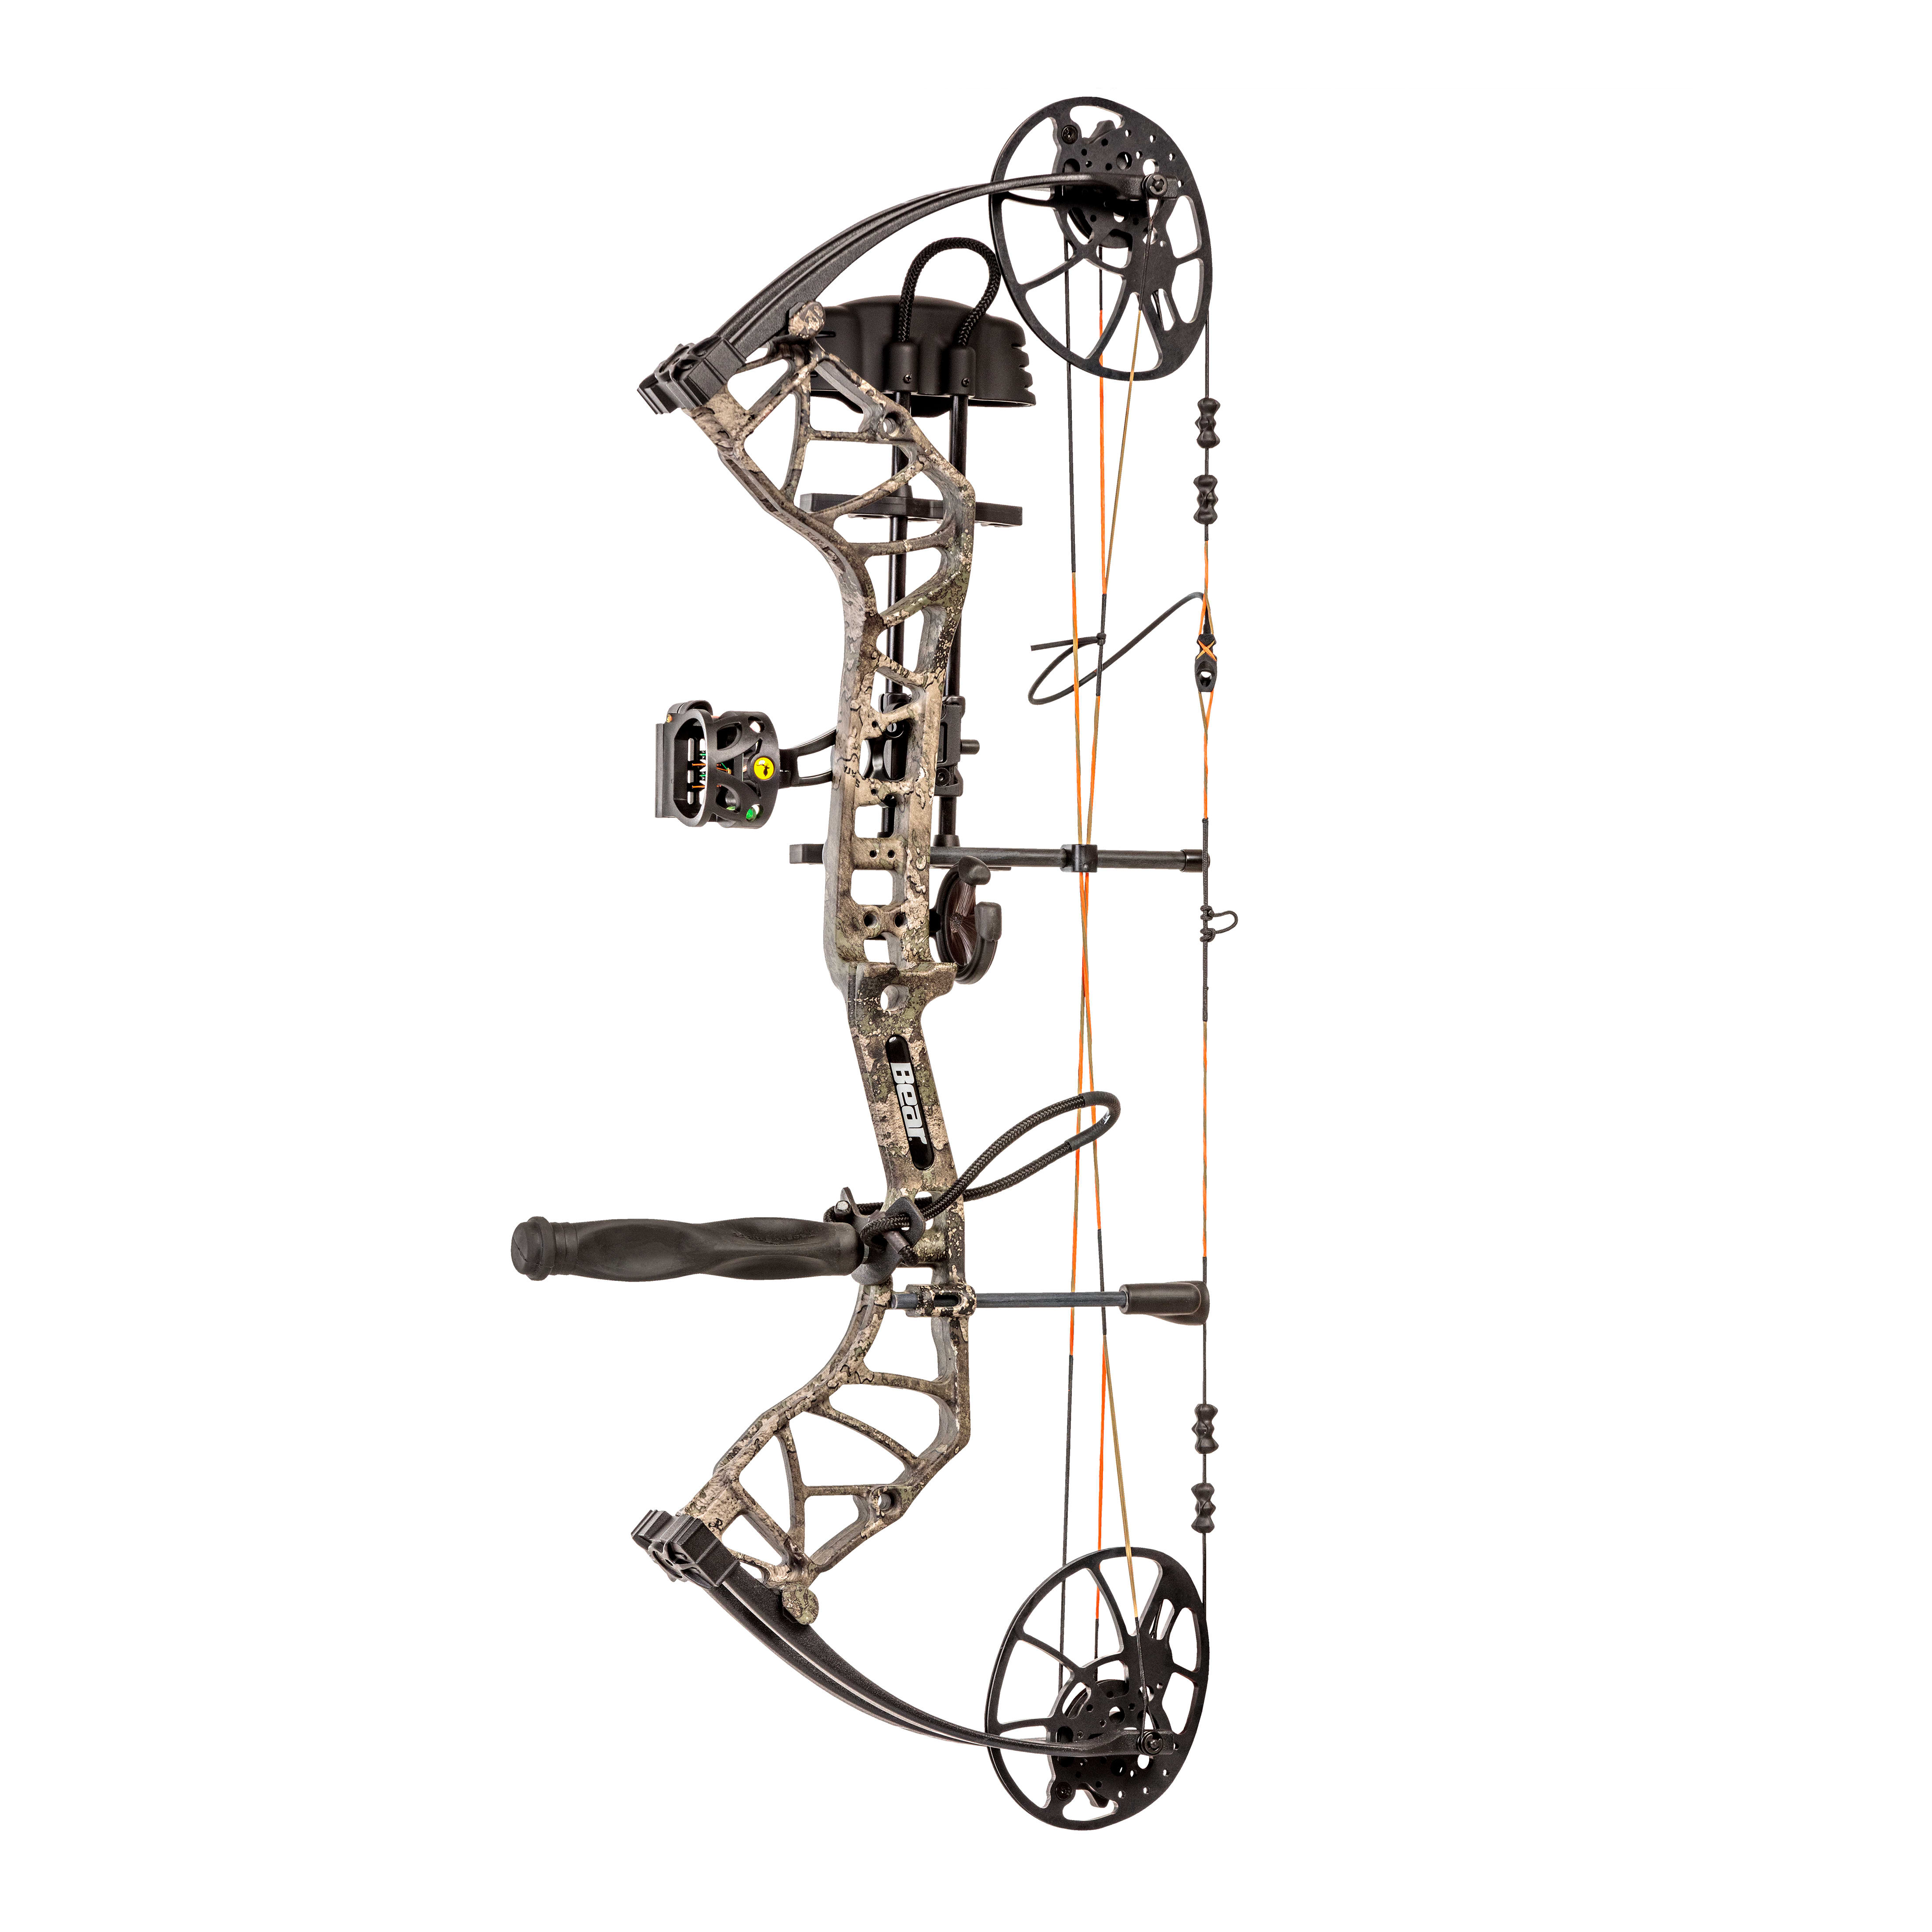 Bear® Archery Legit Compound Bow Package - TrueTimber Strata